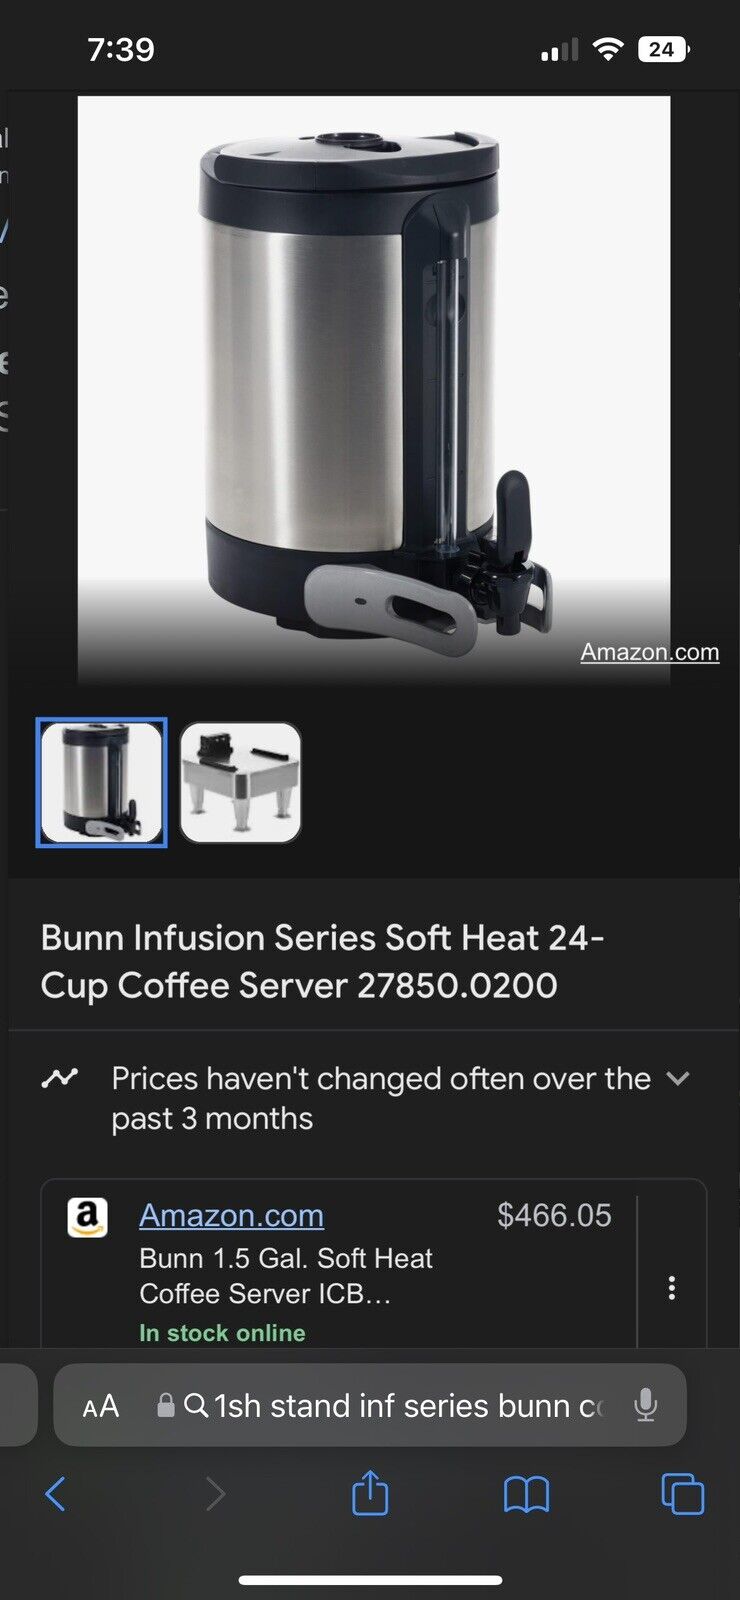 Bunn Infusion Series 24 Cup Coffee Server